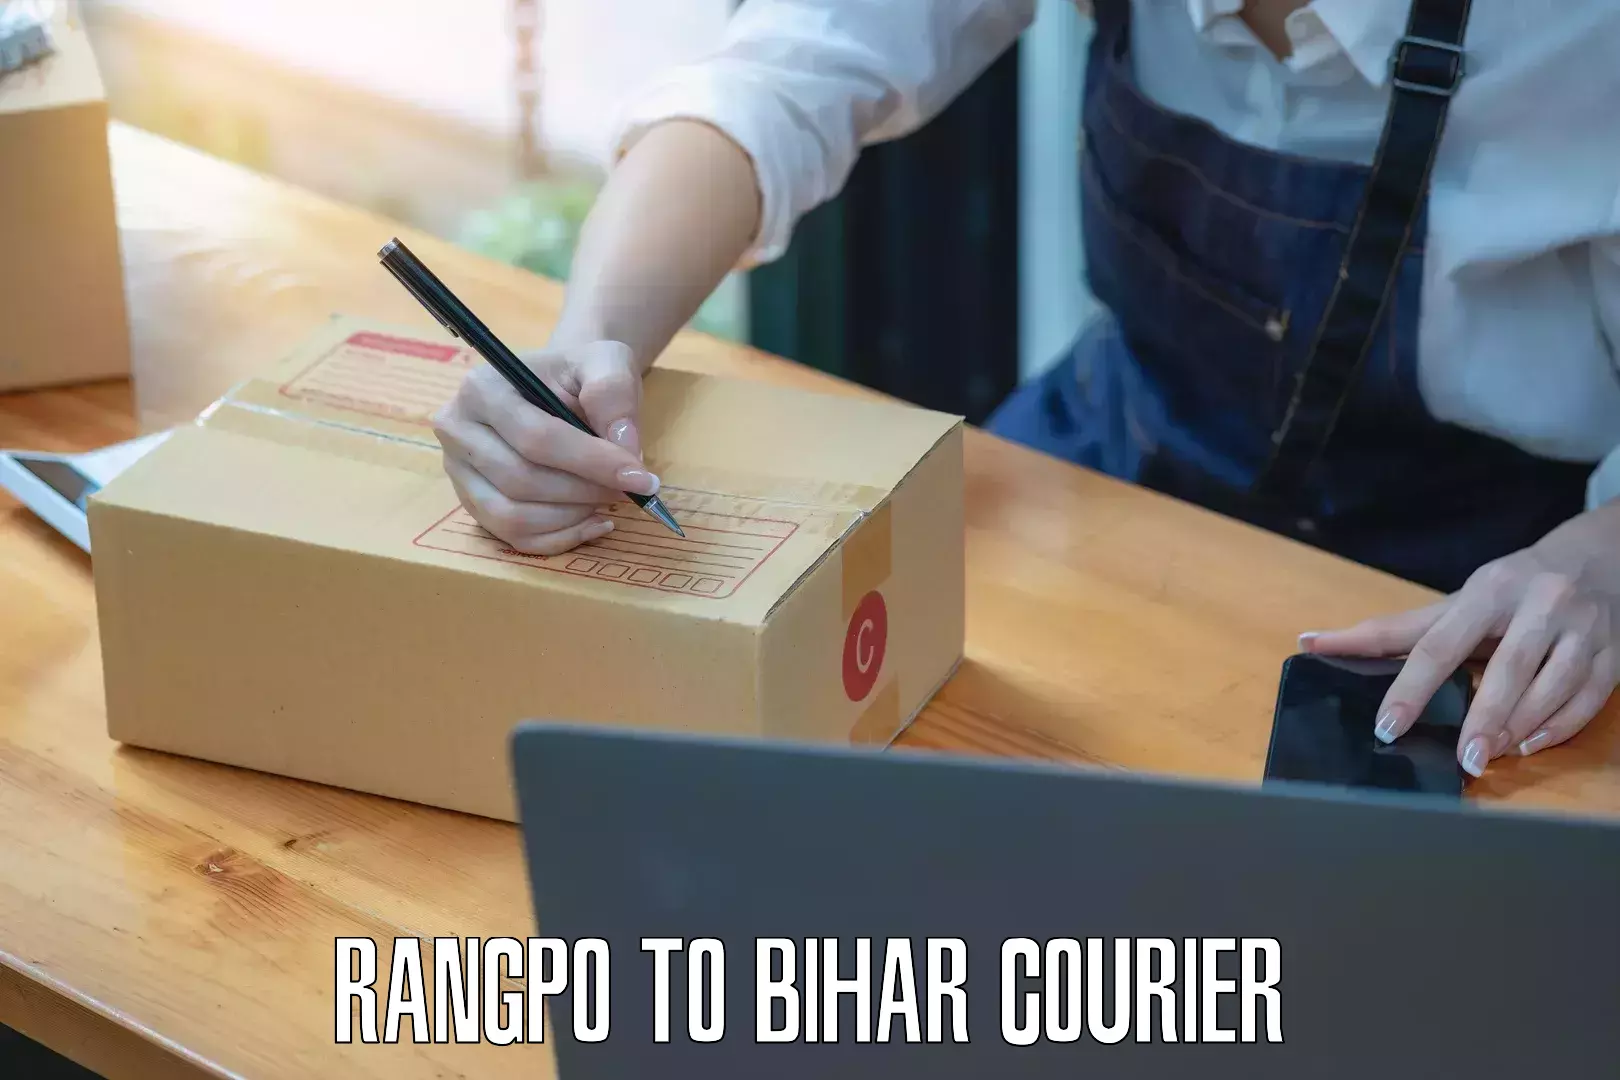 Courier app in Rangpo to Maranga